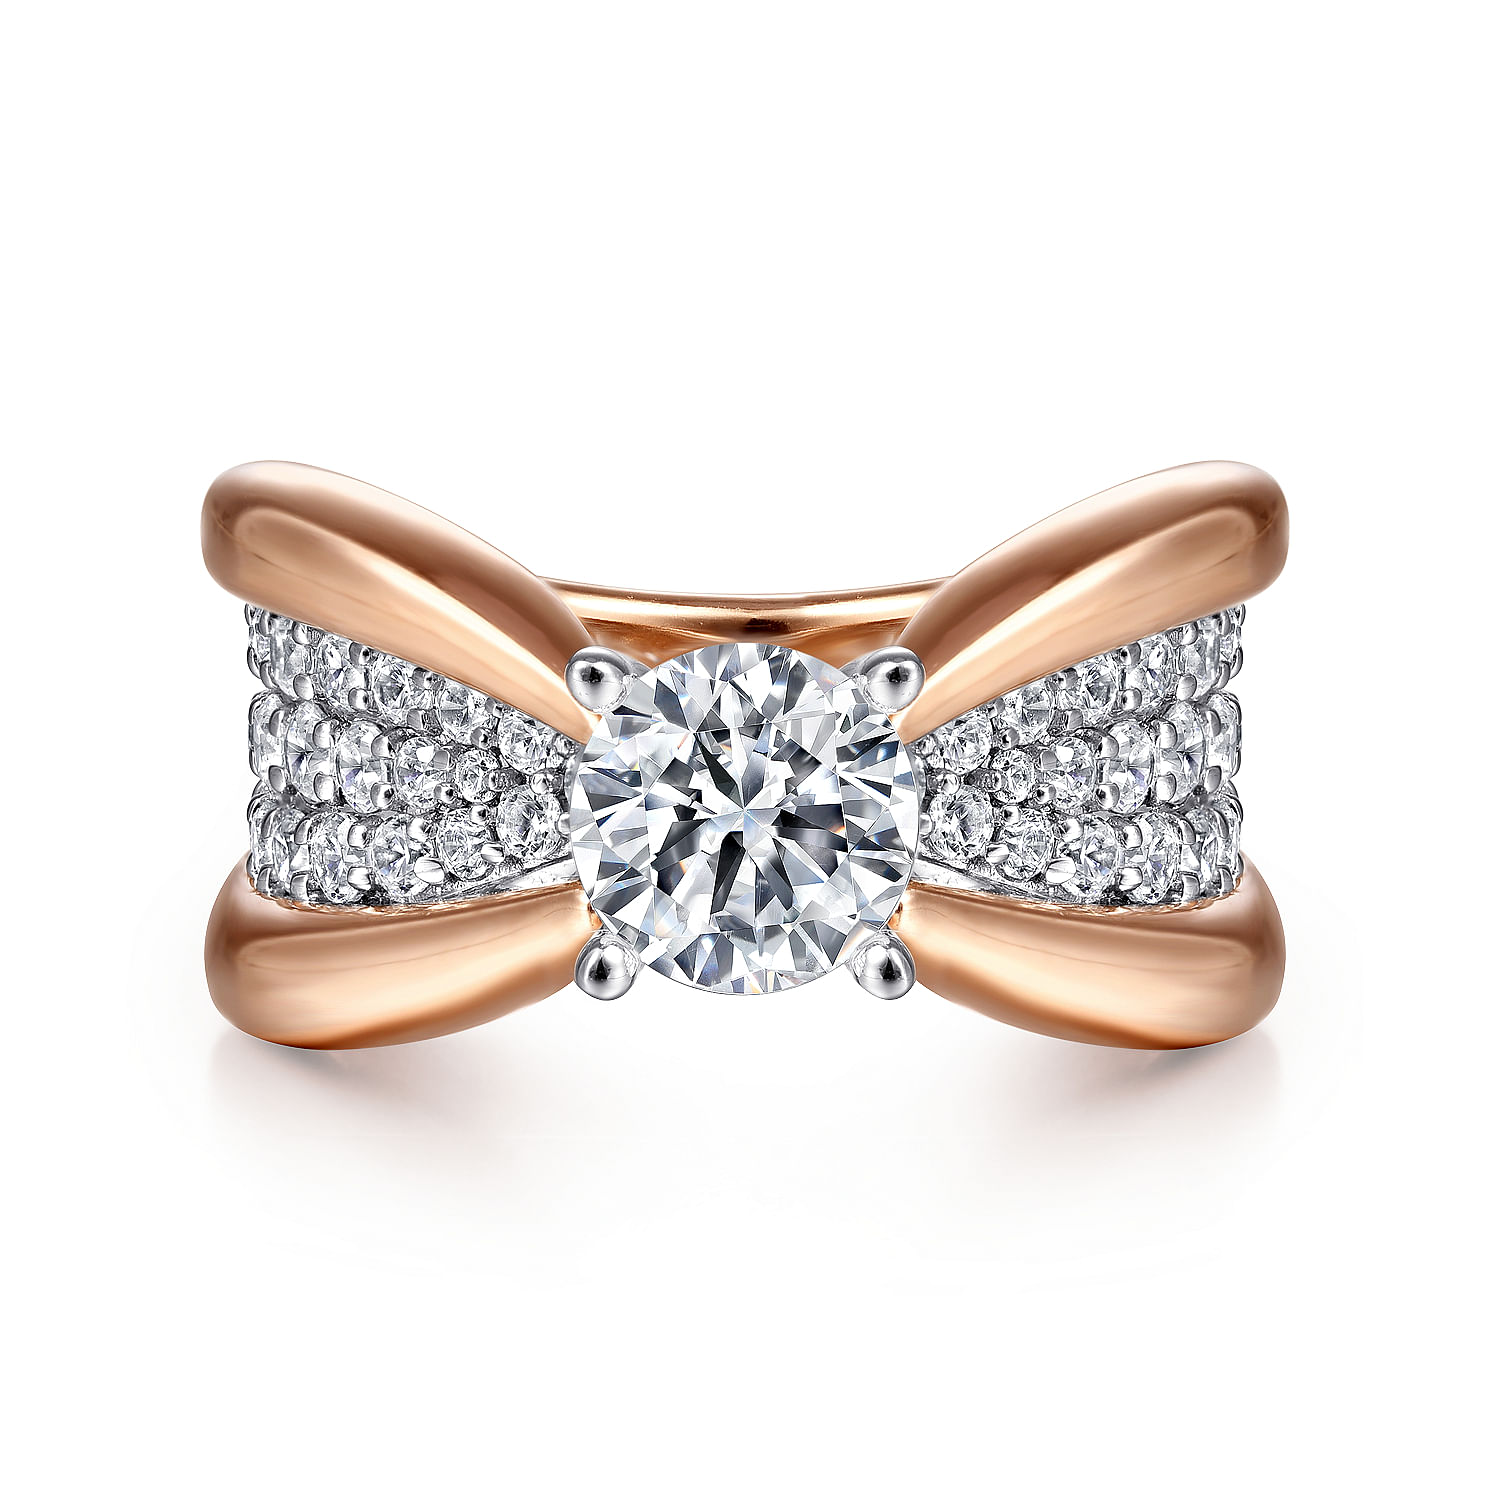 Bebe - 14K White-Rose Gold Wide Band Round Diamond Engagement Ring